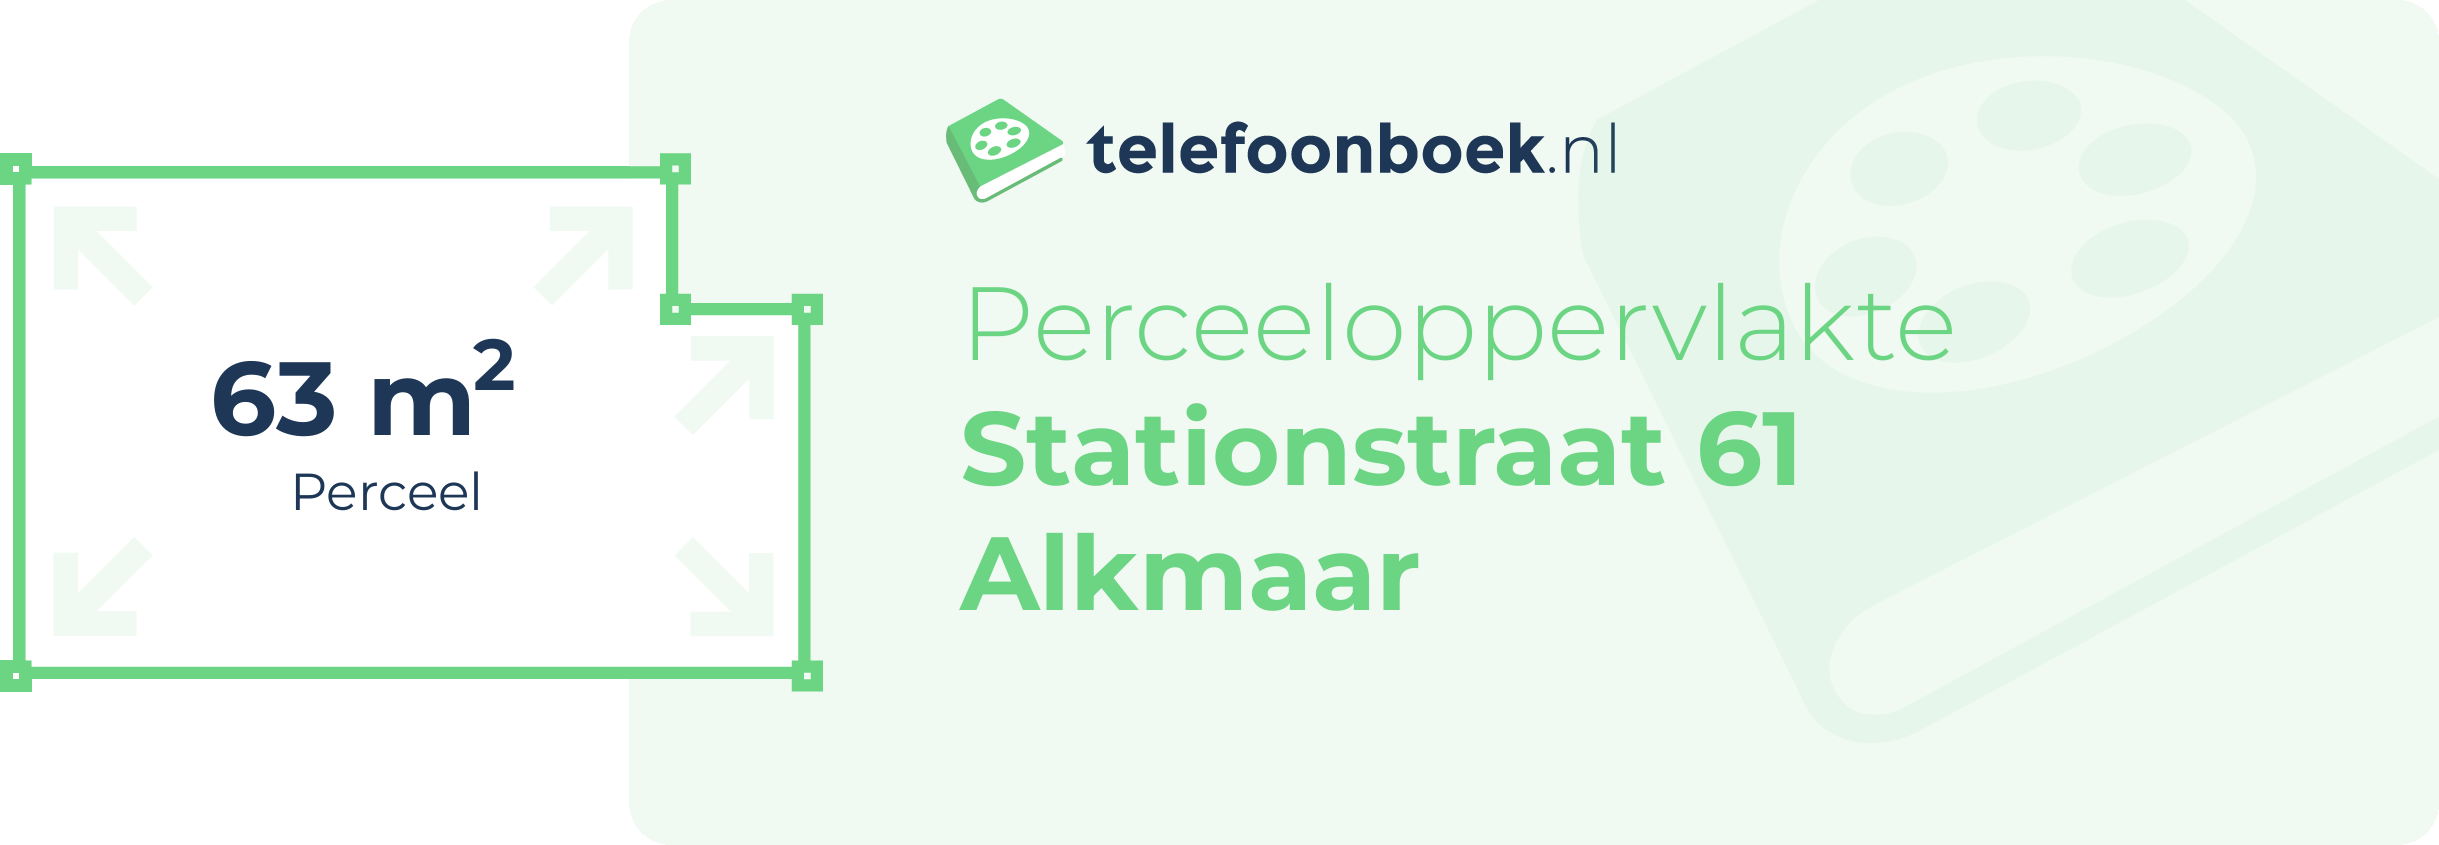 Perceeloppervlakte Stationstraat 61 Alkmaar